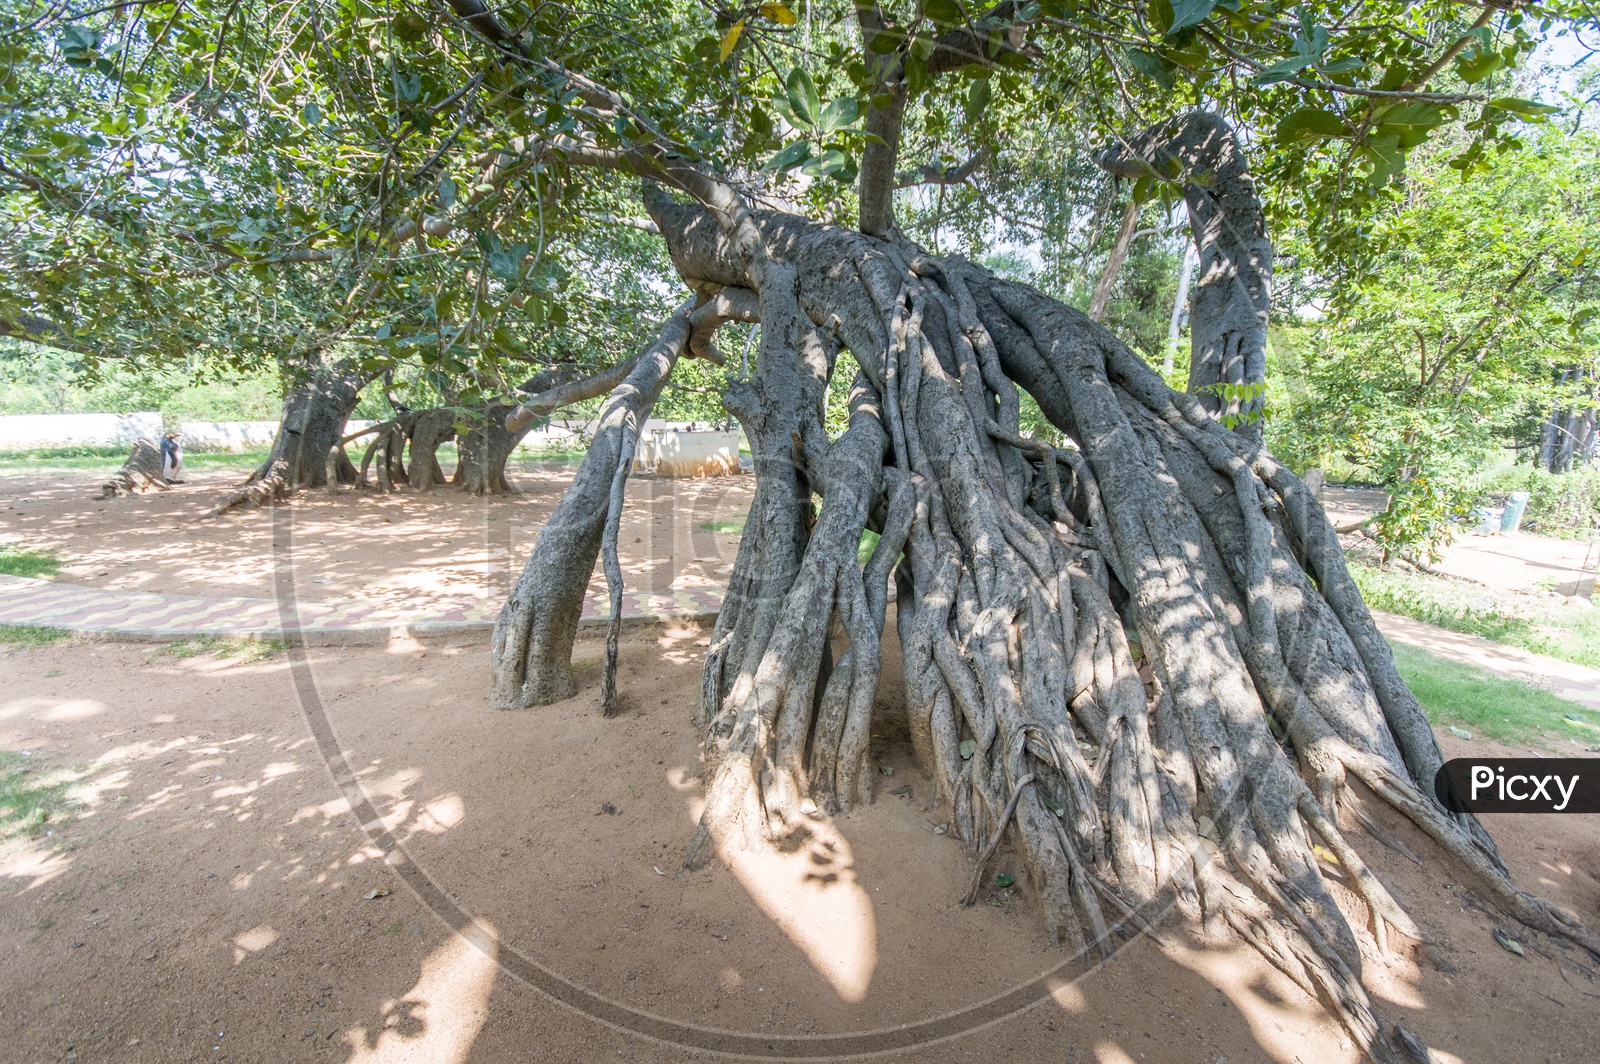 Pillala Marri Giant Banyan Tree